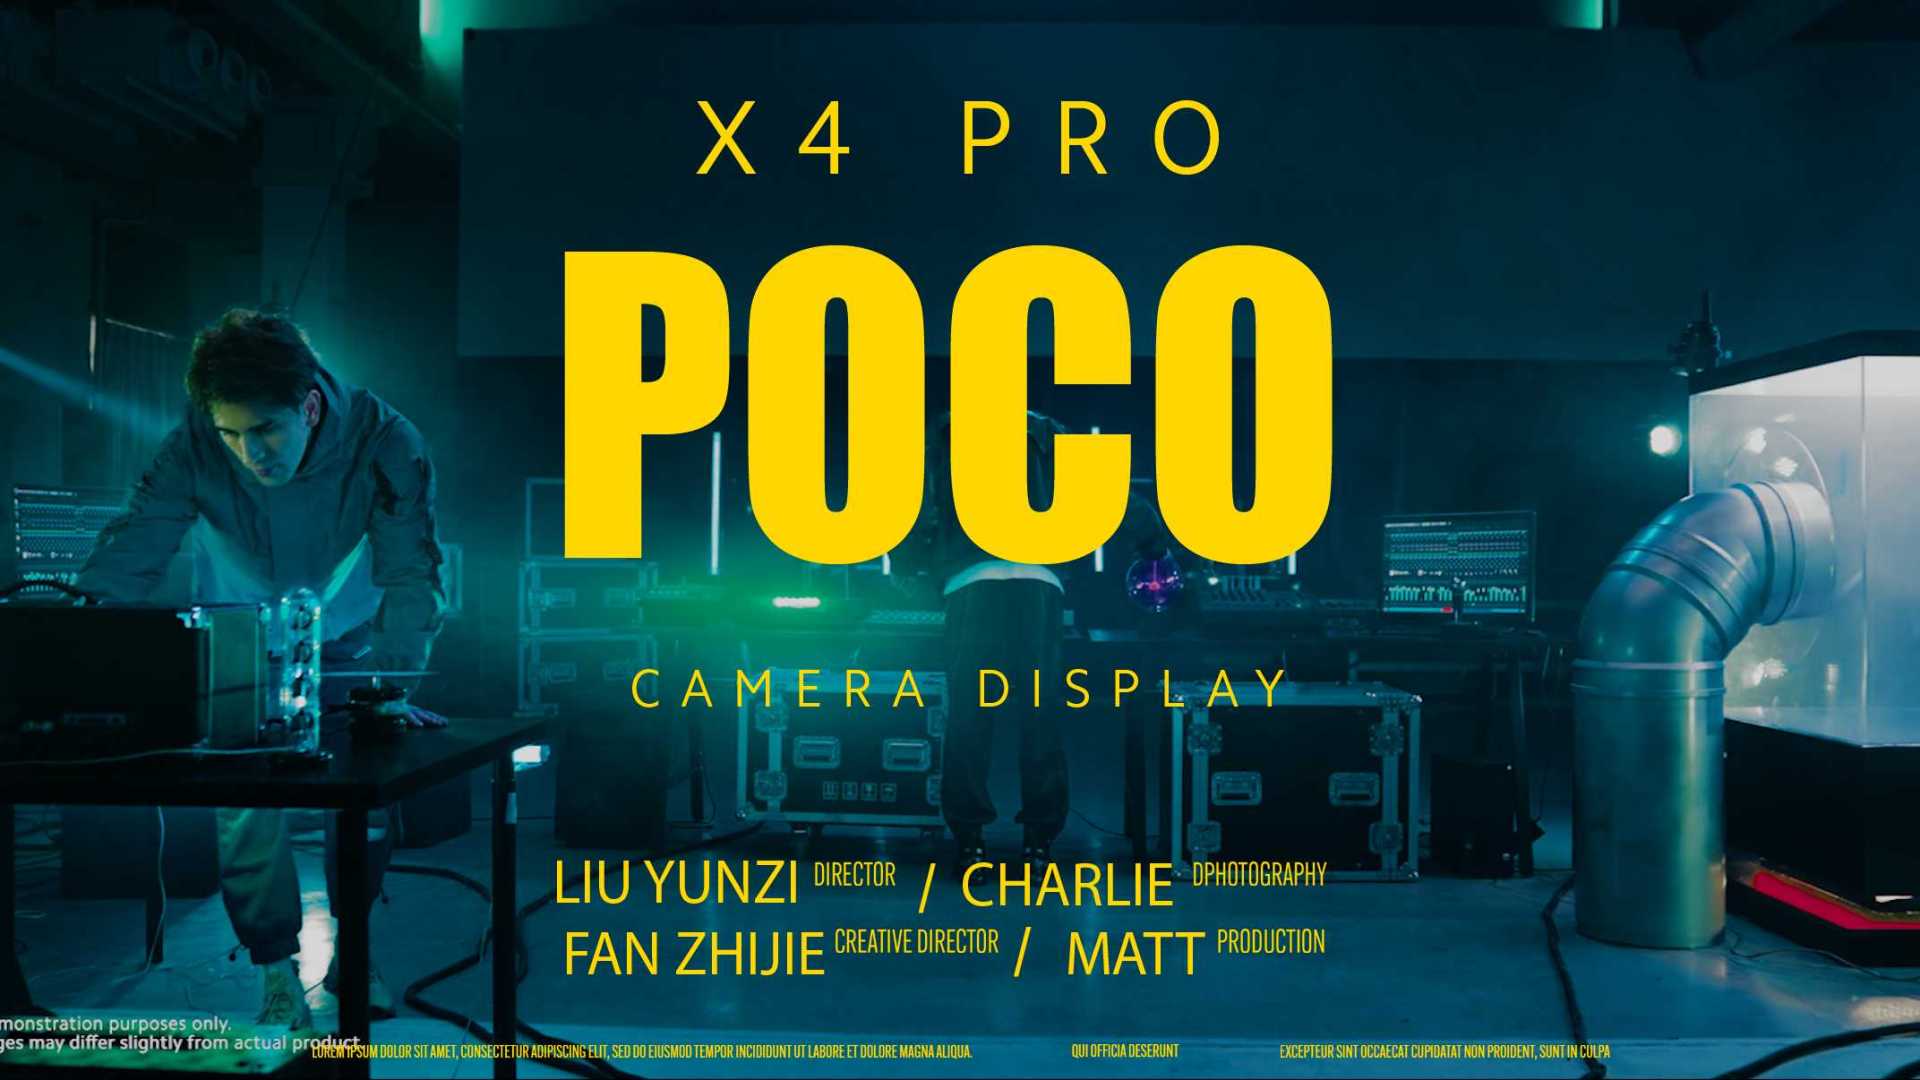 POCO X4 PRO / CAMERA DISPLAY